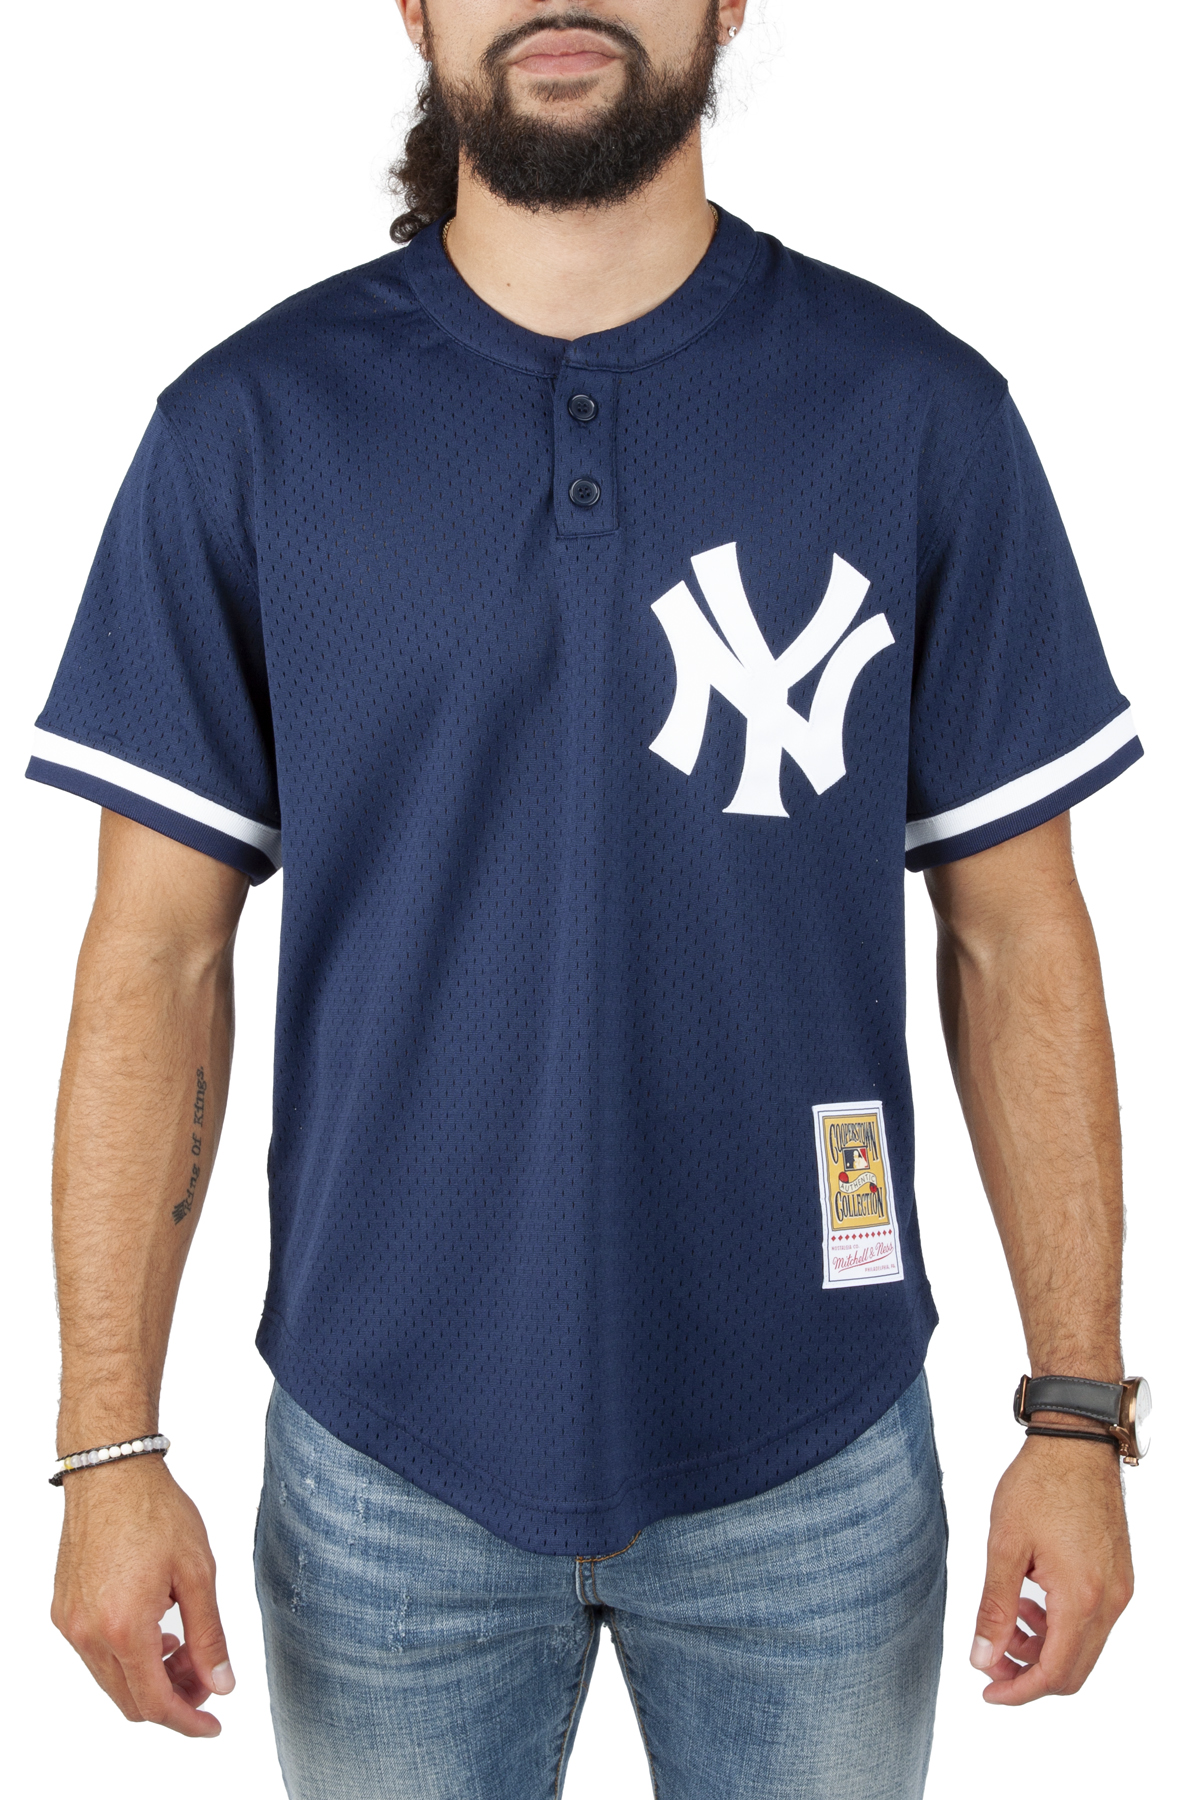 Derek Jeter's first Yankees jersey sold for $369,000